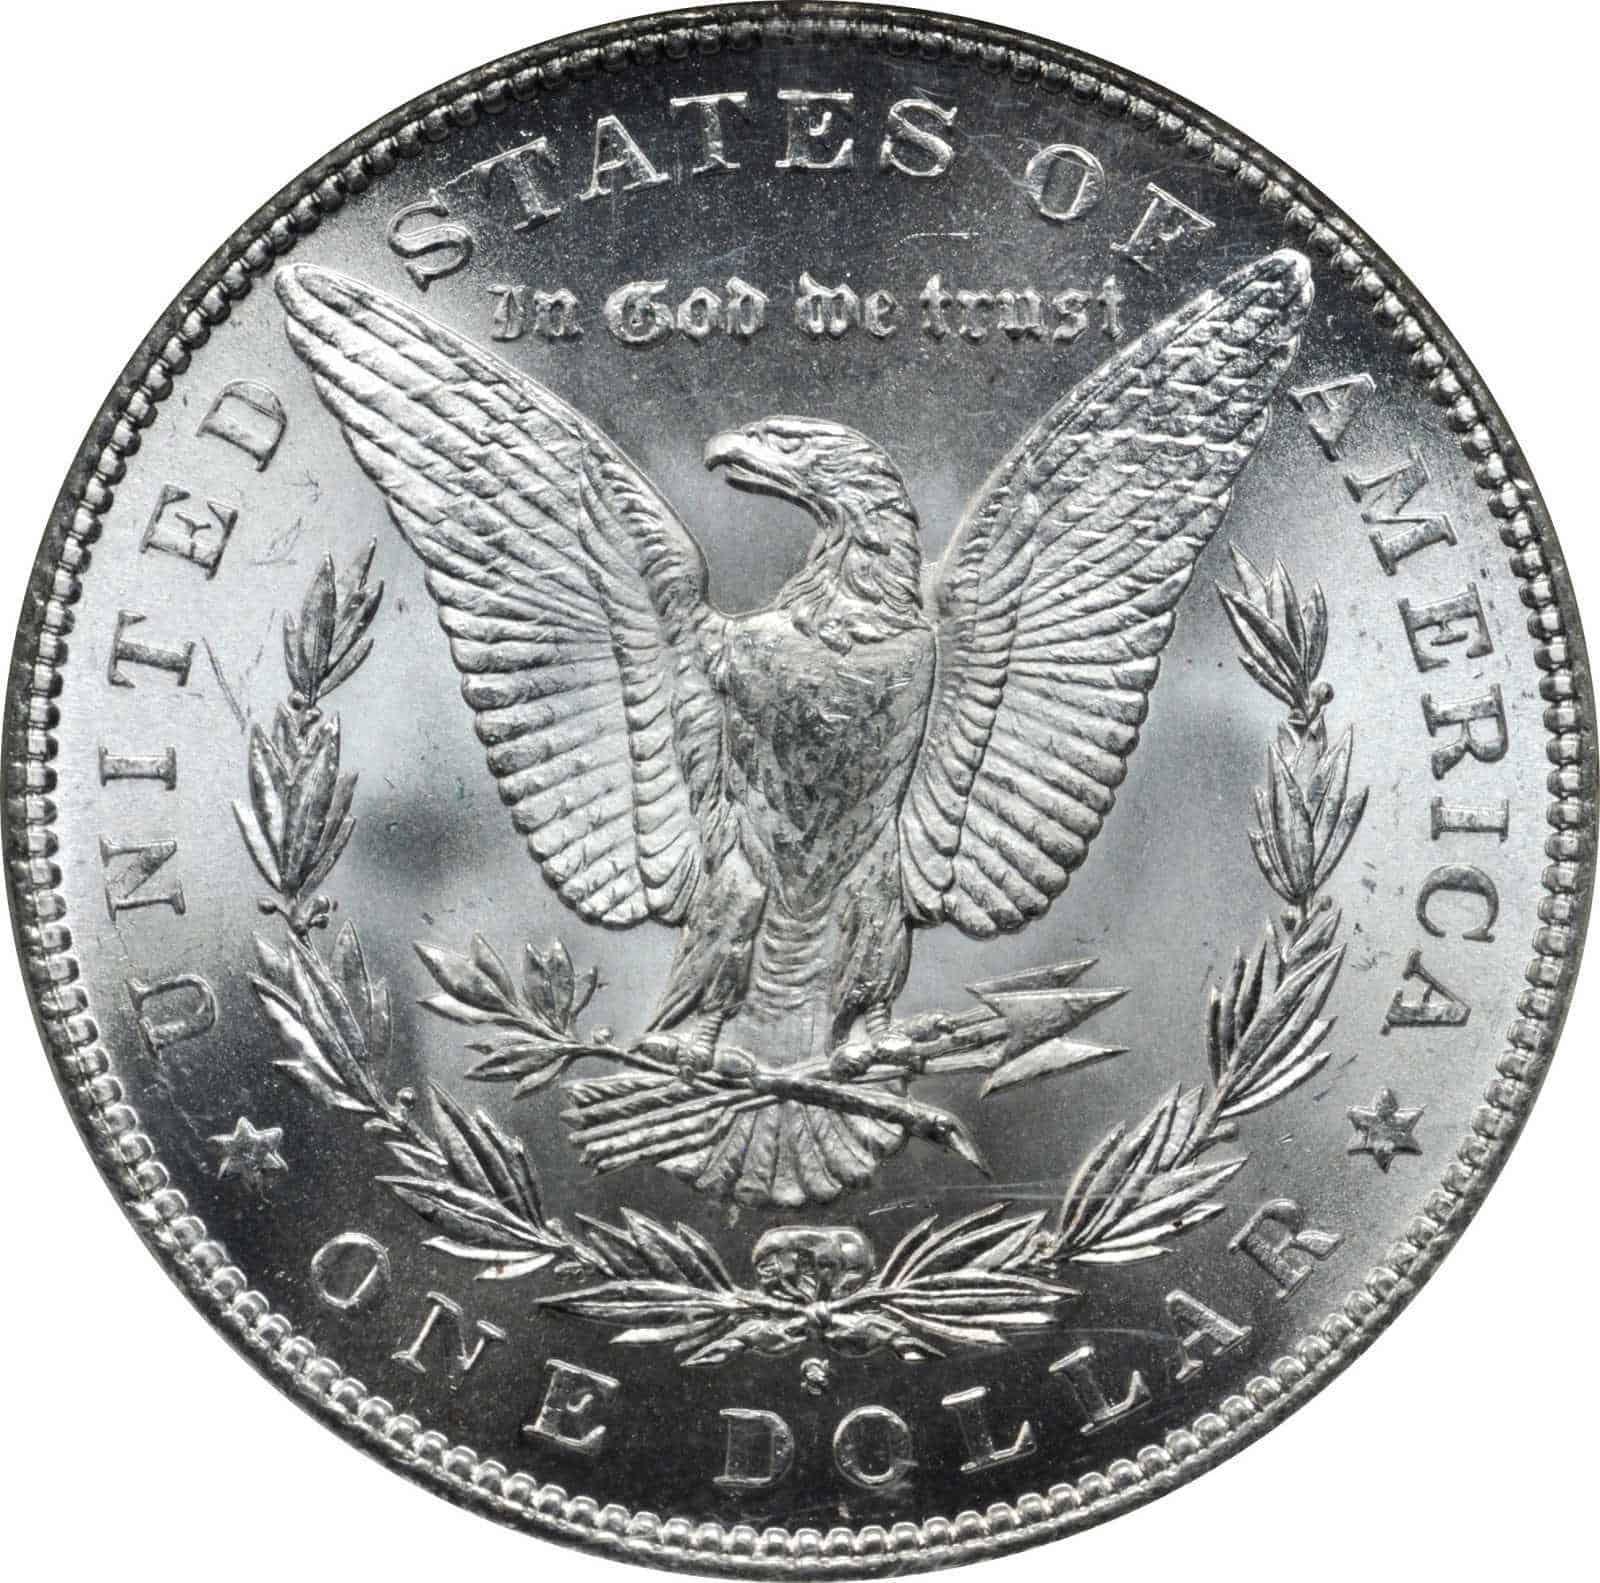 The reverse of the silver 1897 Morgan dollar